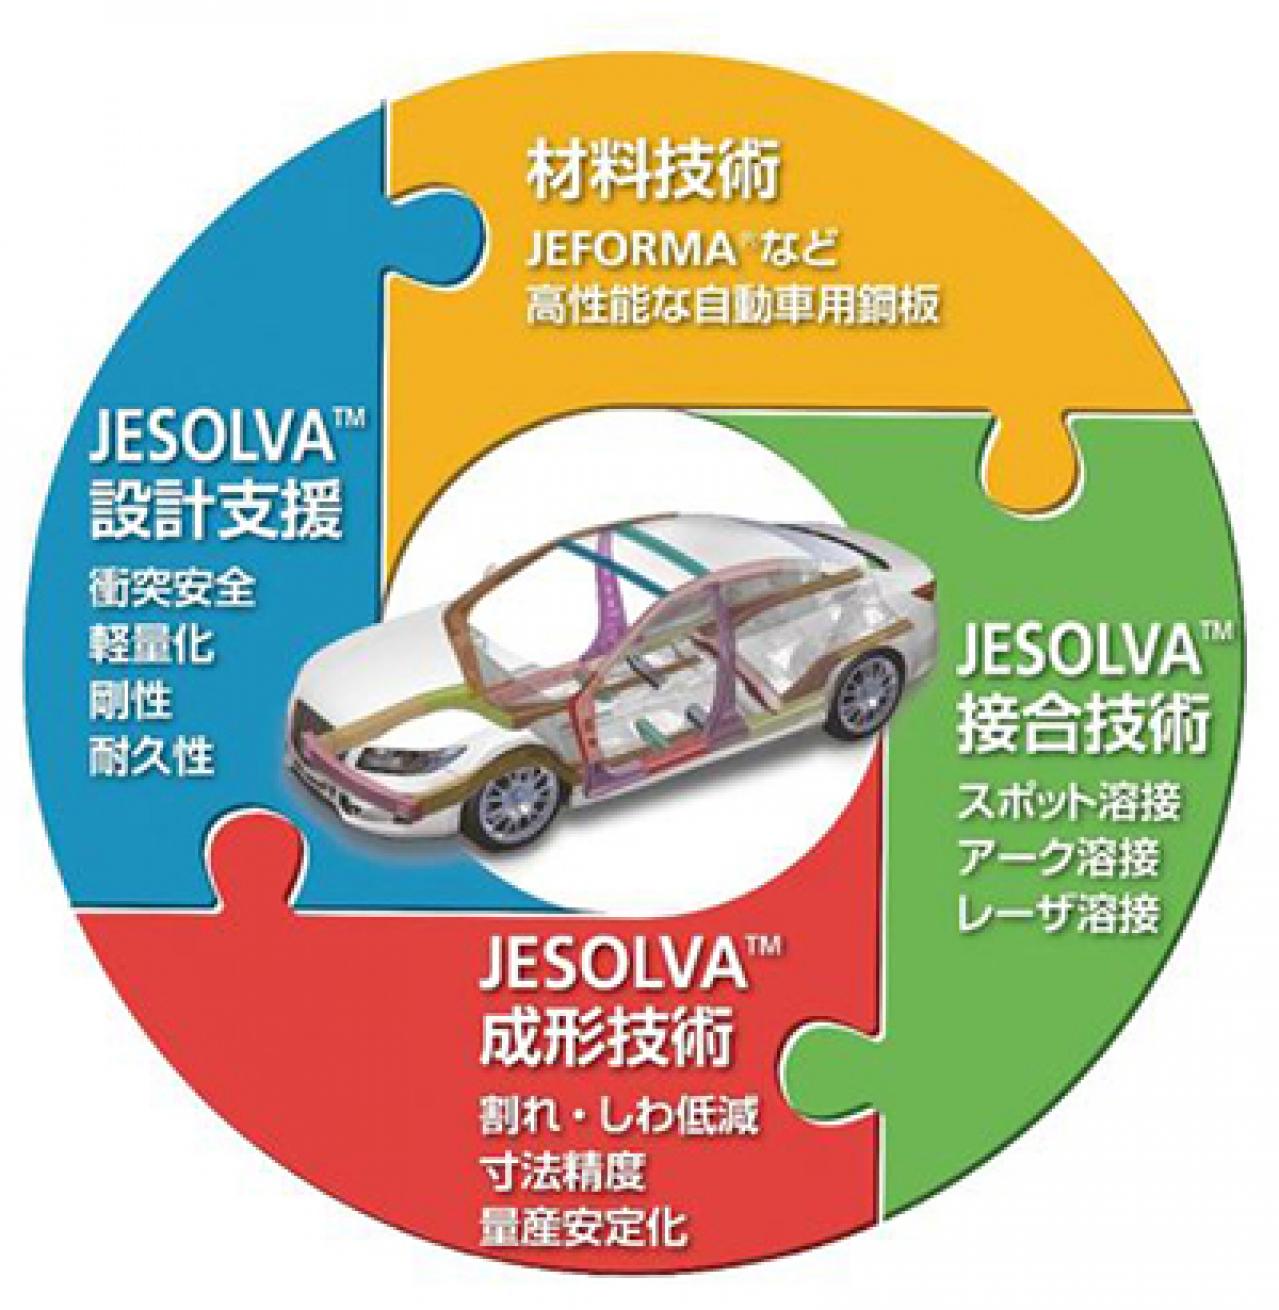 JFEスチール：自動車用鋼板の利用技術を『JESOLVA』として体系化